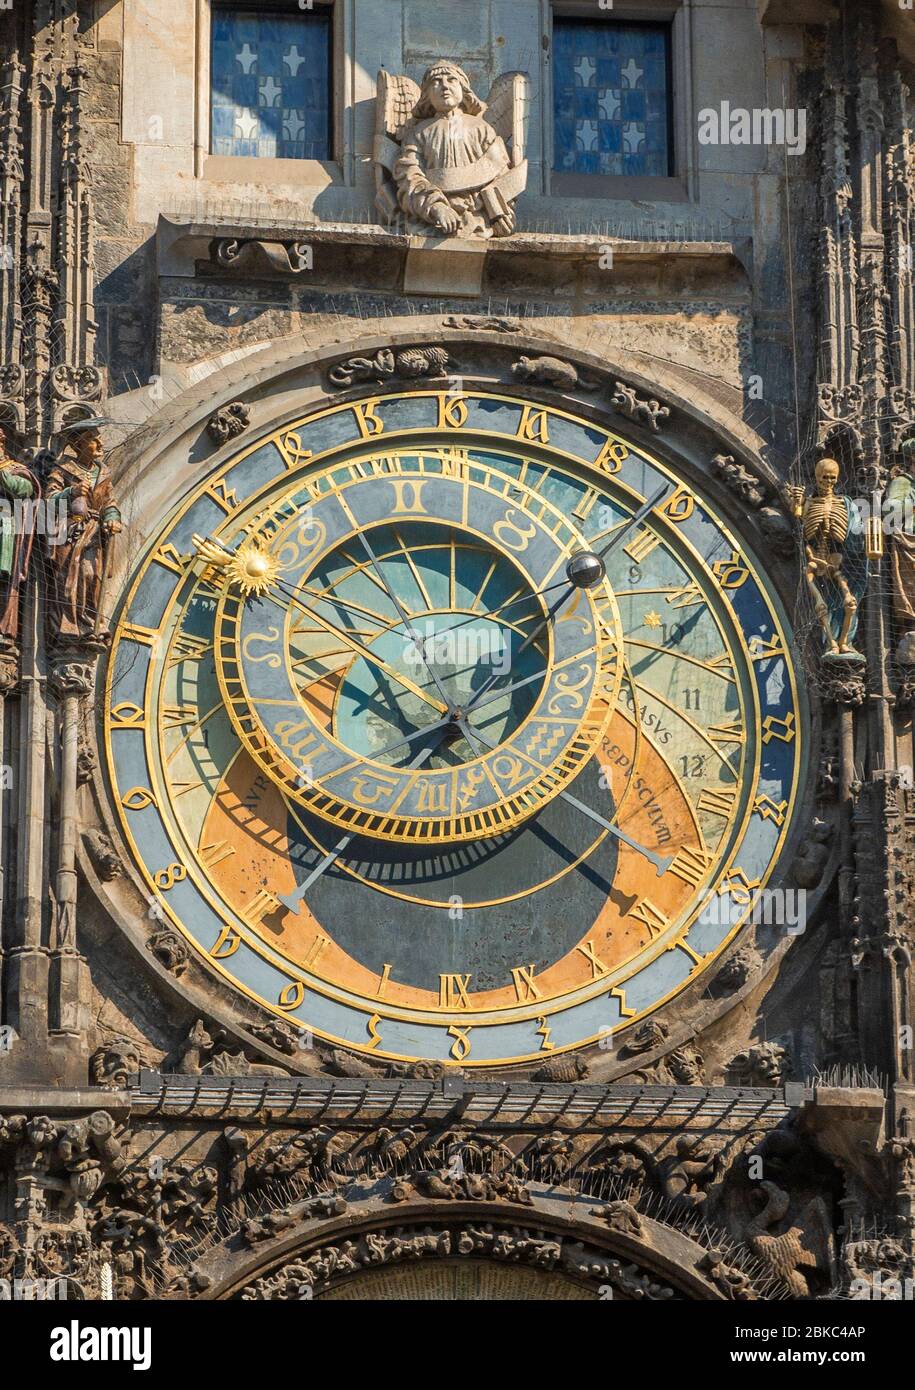 Prague astronomical clock, famous Prague landmark in the center square of Czech Republic capital city. Stock Photo